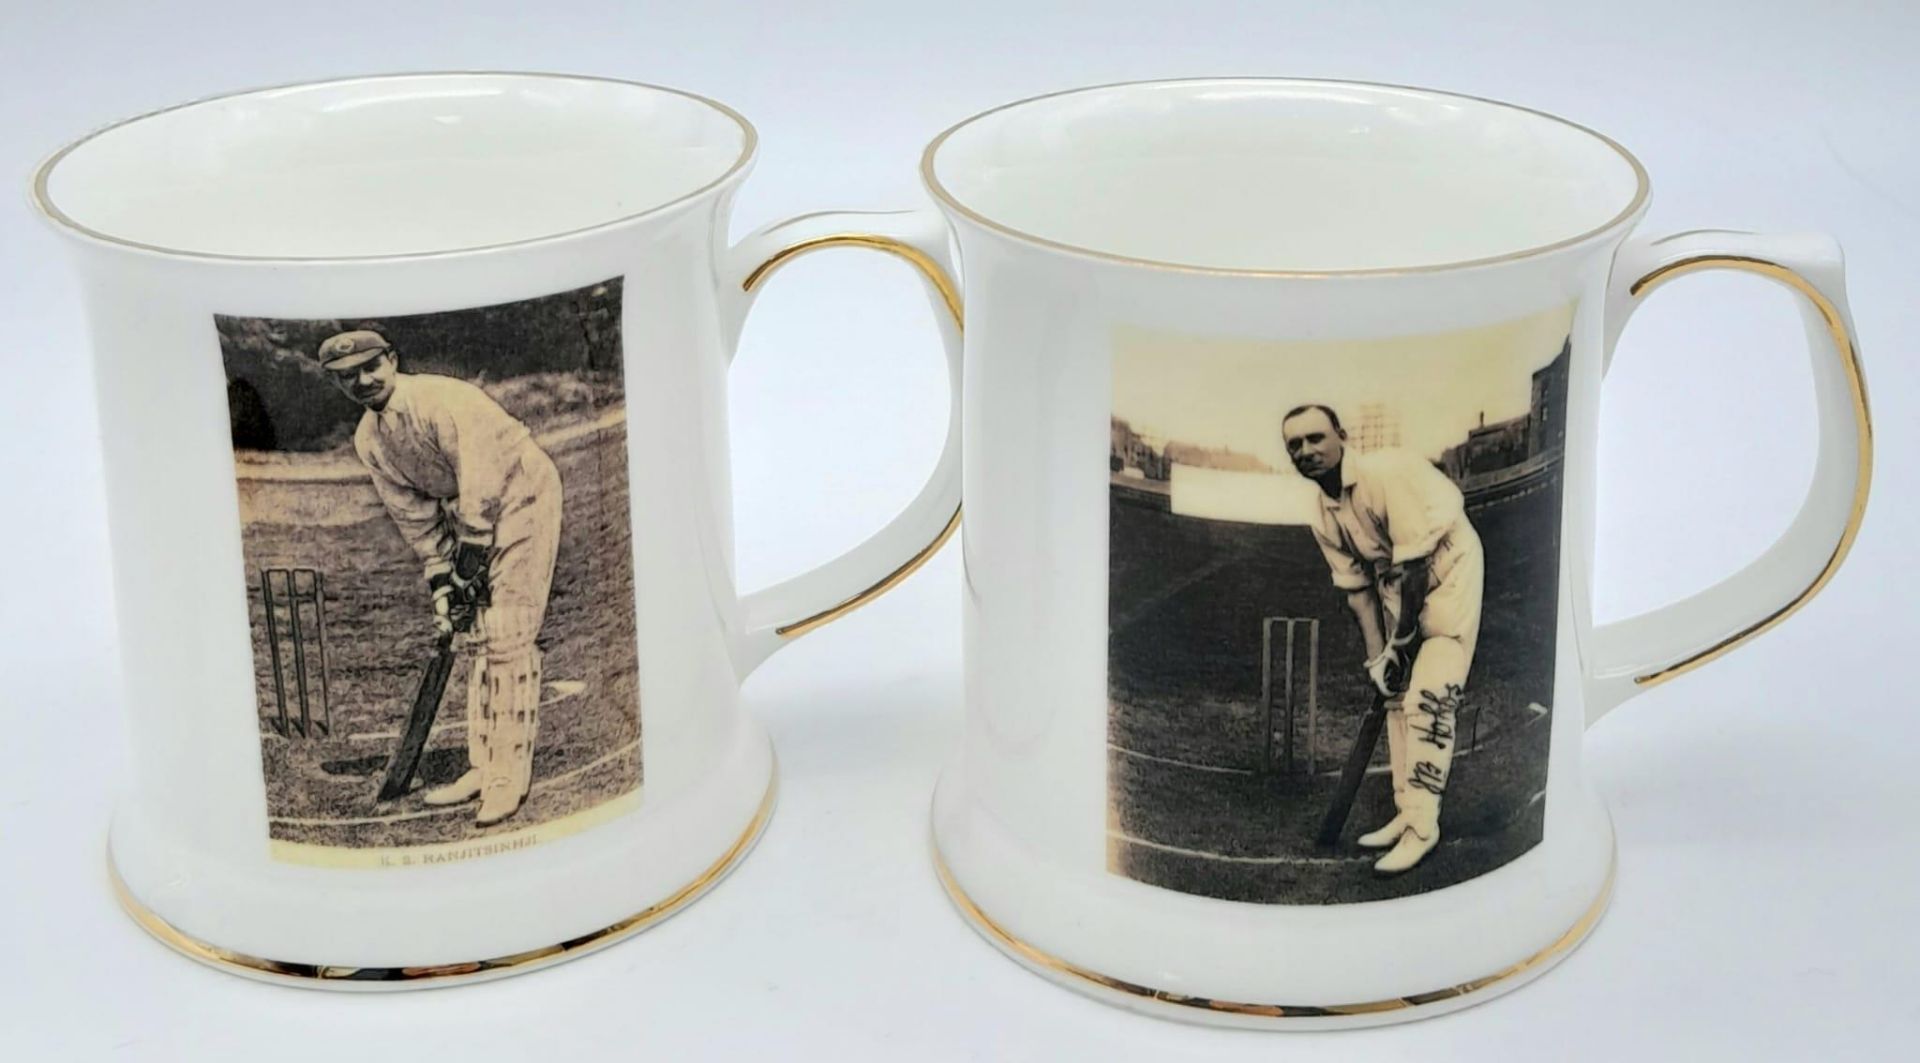 Two Limited Edition Bone China Cricket Mugs Depicting Jack Hobbs and Prince Ranjitsinghi - From